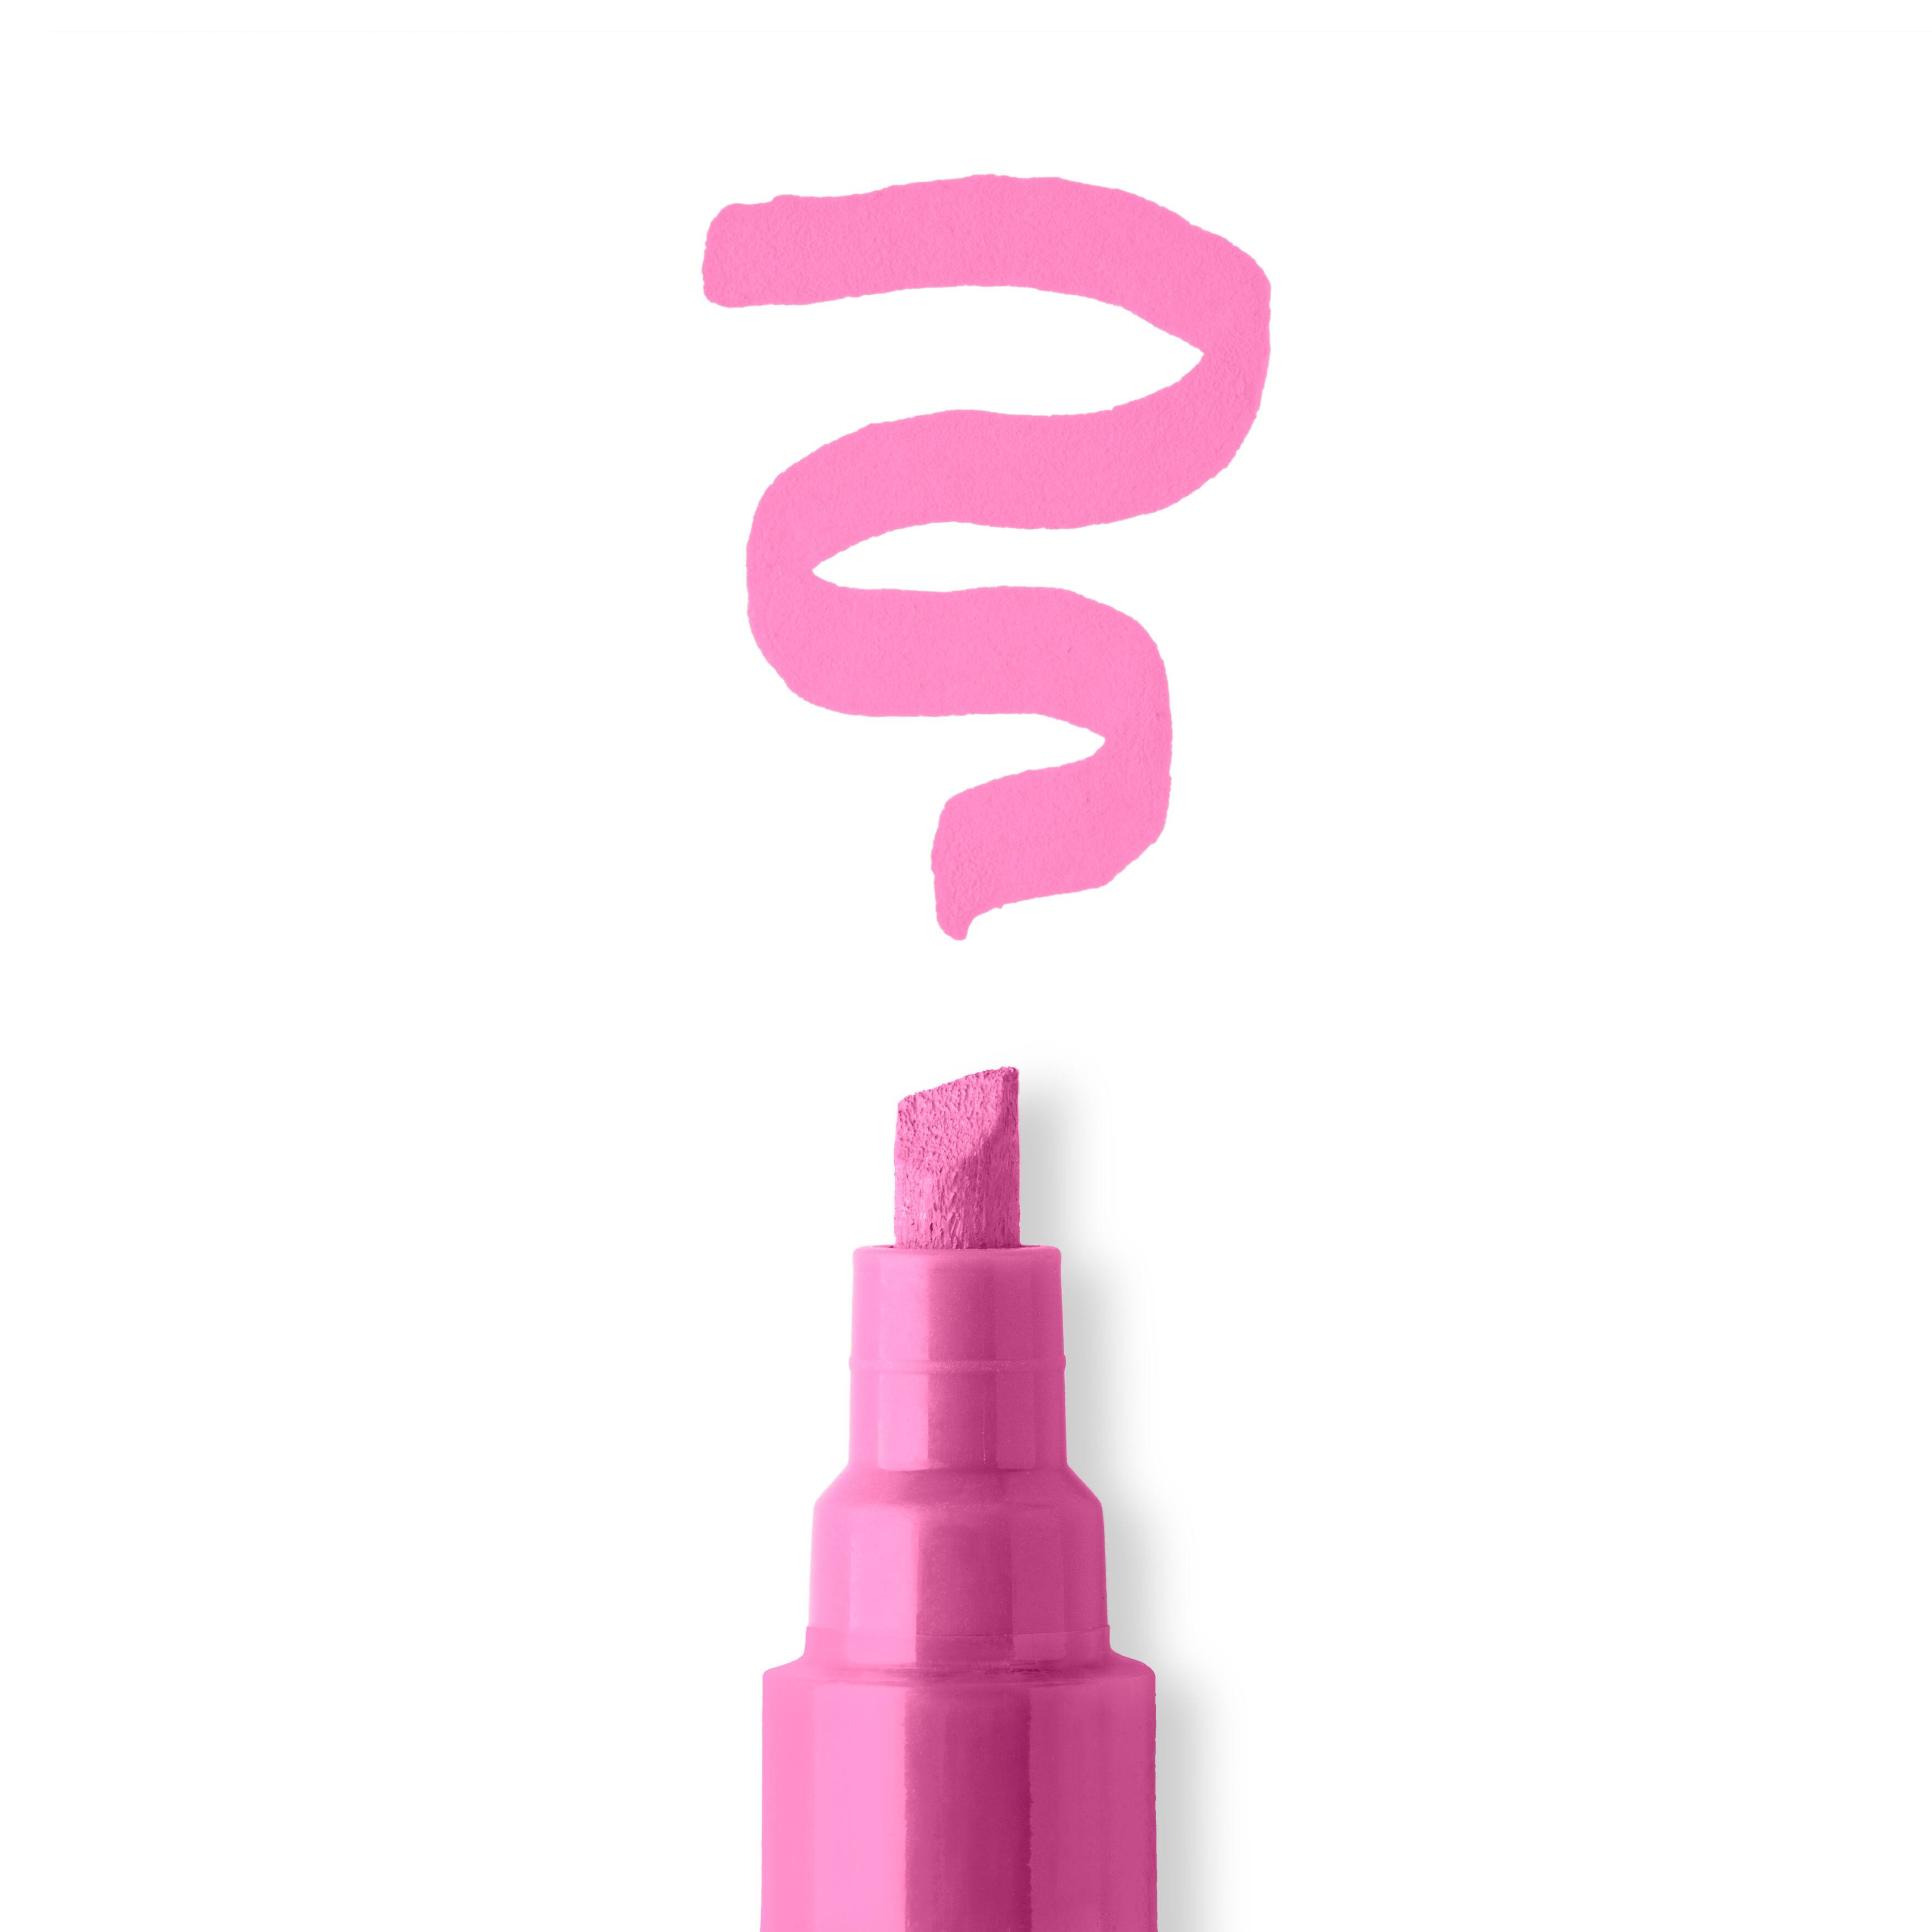 9 Packs: 4 ct. (36 total) Pink &#x26; Purple Chalk Marker Set by Craft Smart&#xAE;